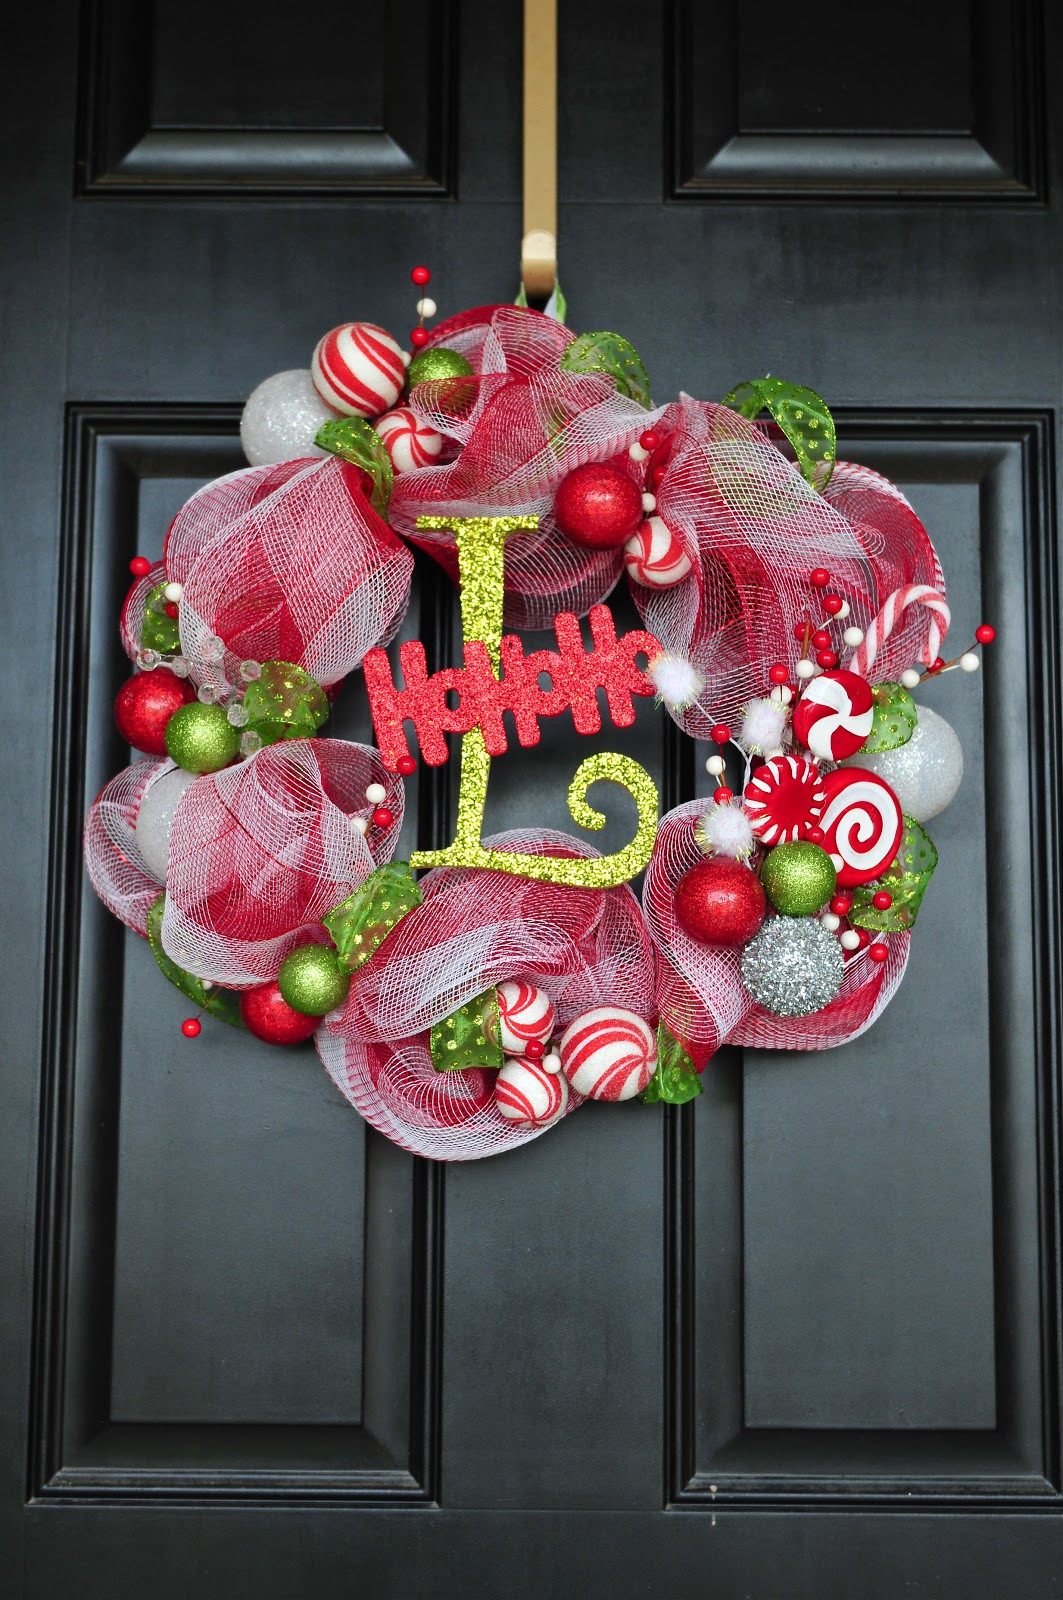 Best ideas about DIY Christmas Wreaths
. Save or Pin DIY Til We Die Easy Christmas mesh wreaths Now.